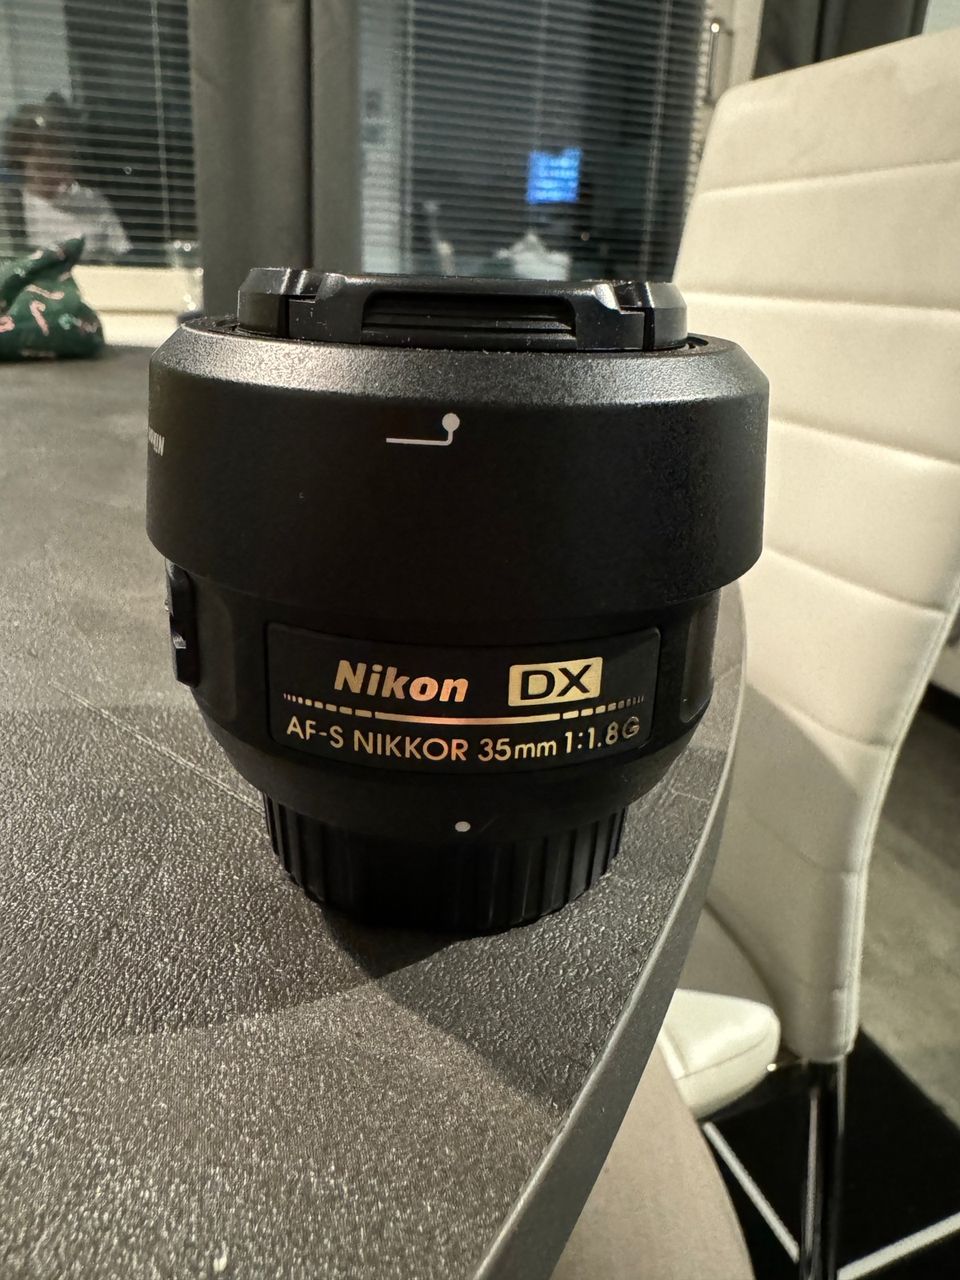 Nikkor DX 35mm f1.8 objektiivi Nikon DX